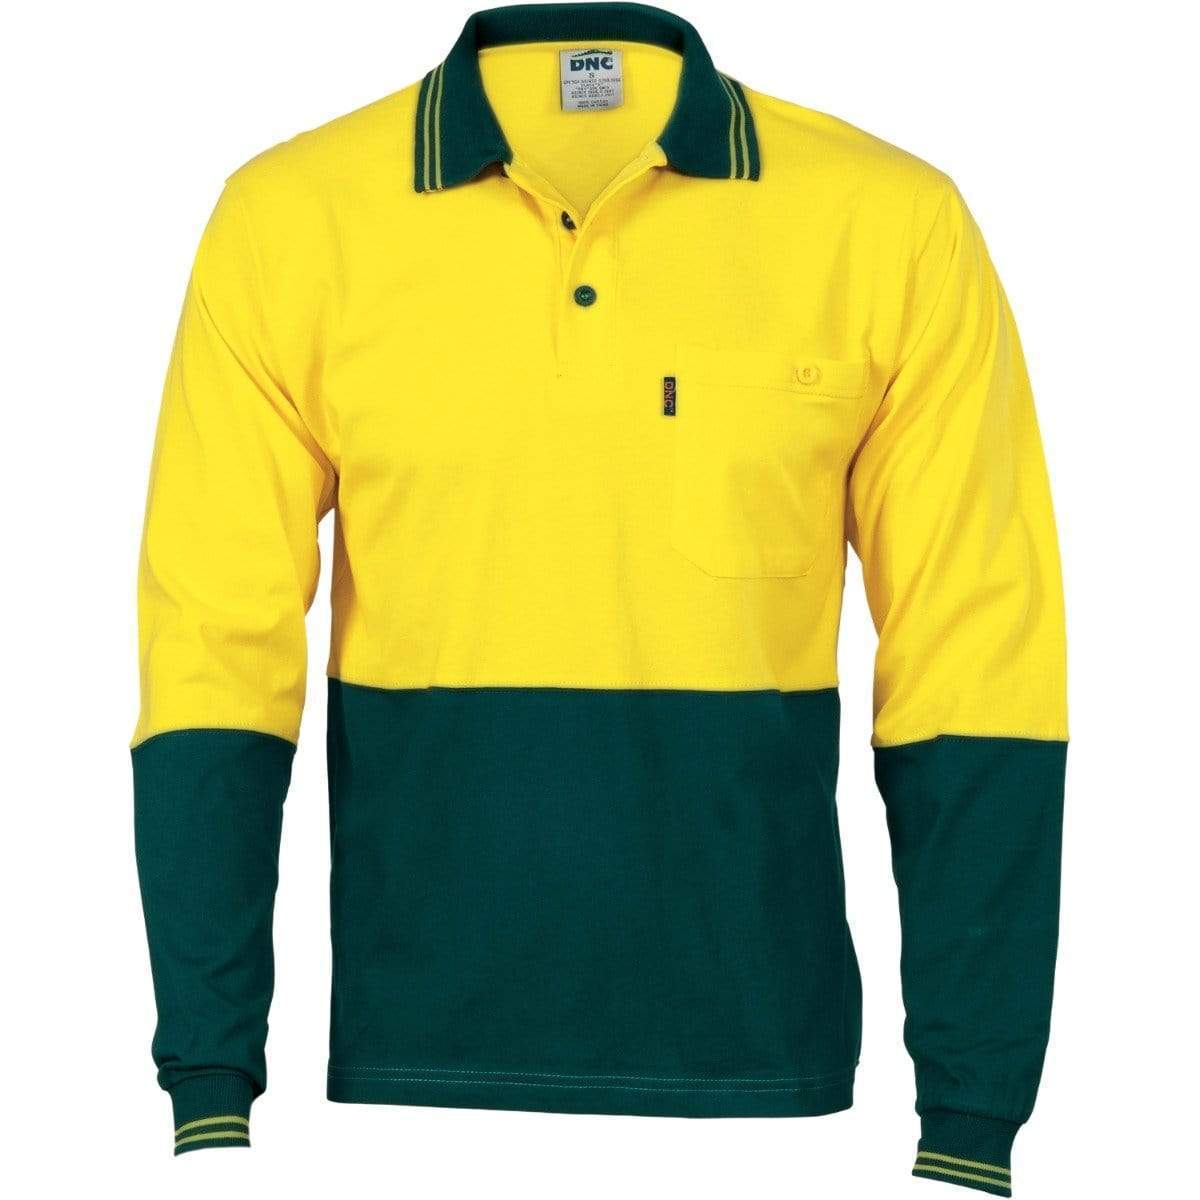 Dnc Workwear Hi-vis Cool-breeze Cotton Jersey Long Sleeve Polo Shirt With Underarm Cotton Mesh - 3846 Work Wear DNC Workwear Yellow/Bottle Green XS 